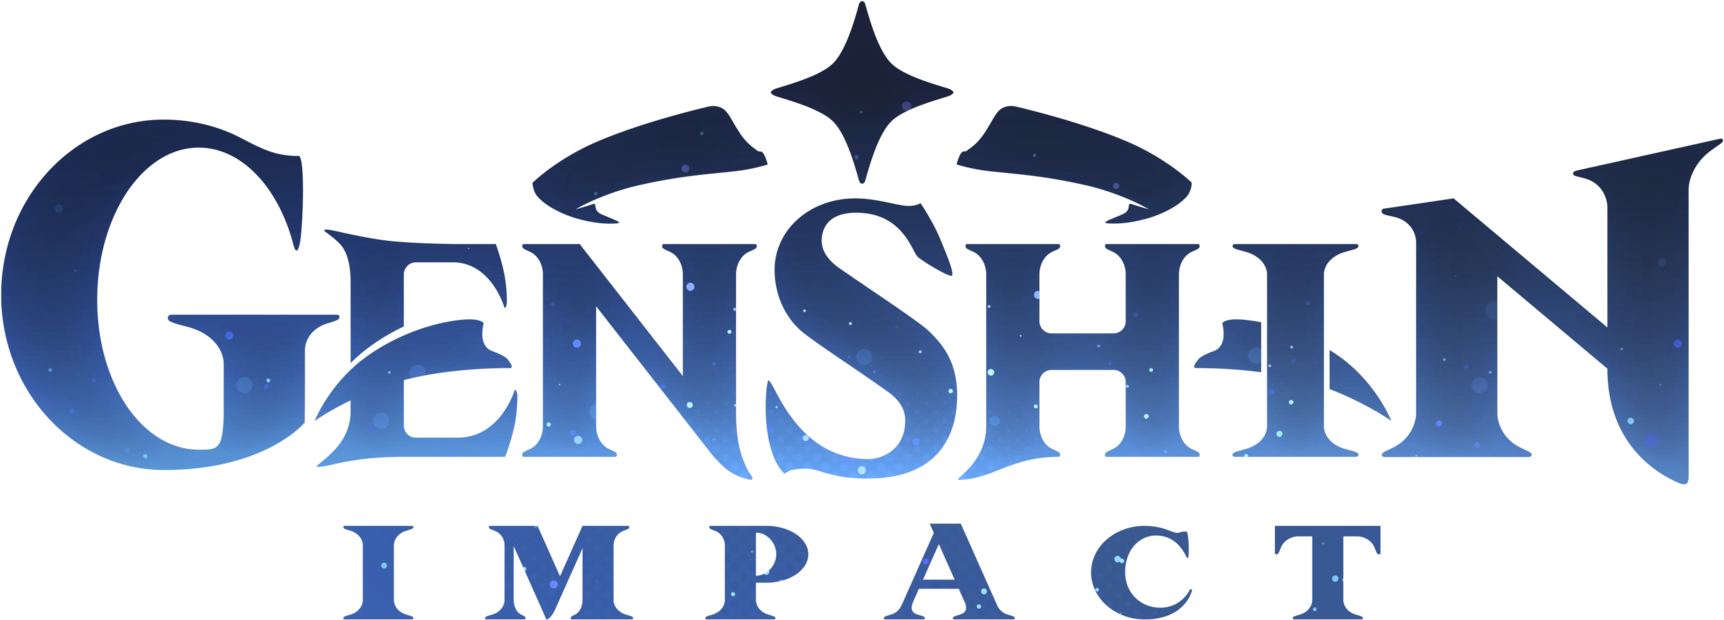 Logo Genshin Impact